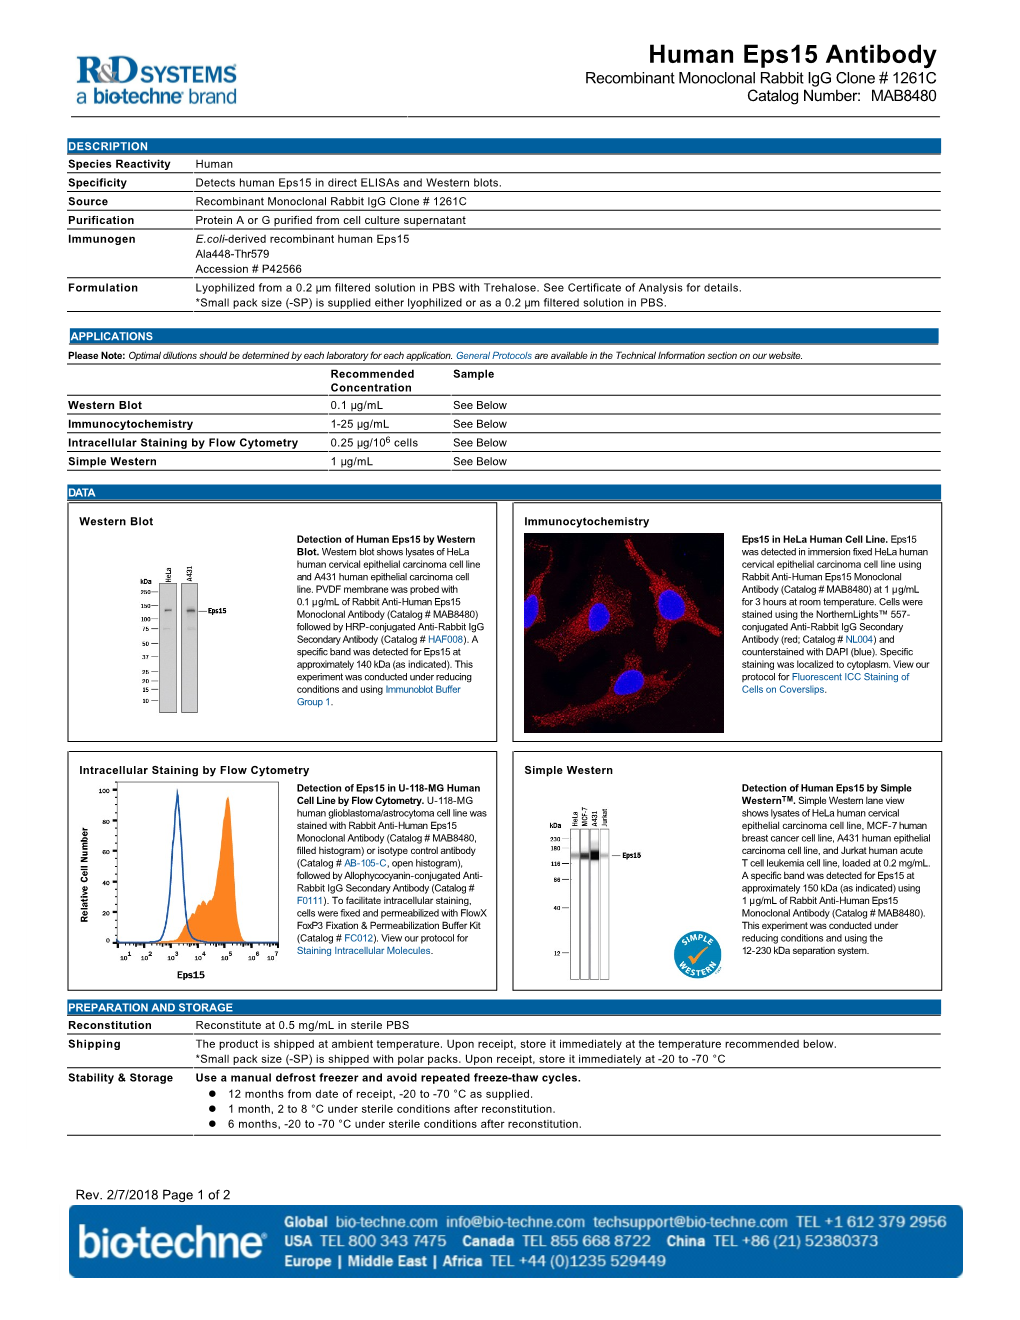 Human Eps15 Antibody Recombinant Monoclonal Rabbit Igg Clone # 1261C Catalog Number: MAB8480